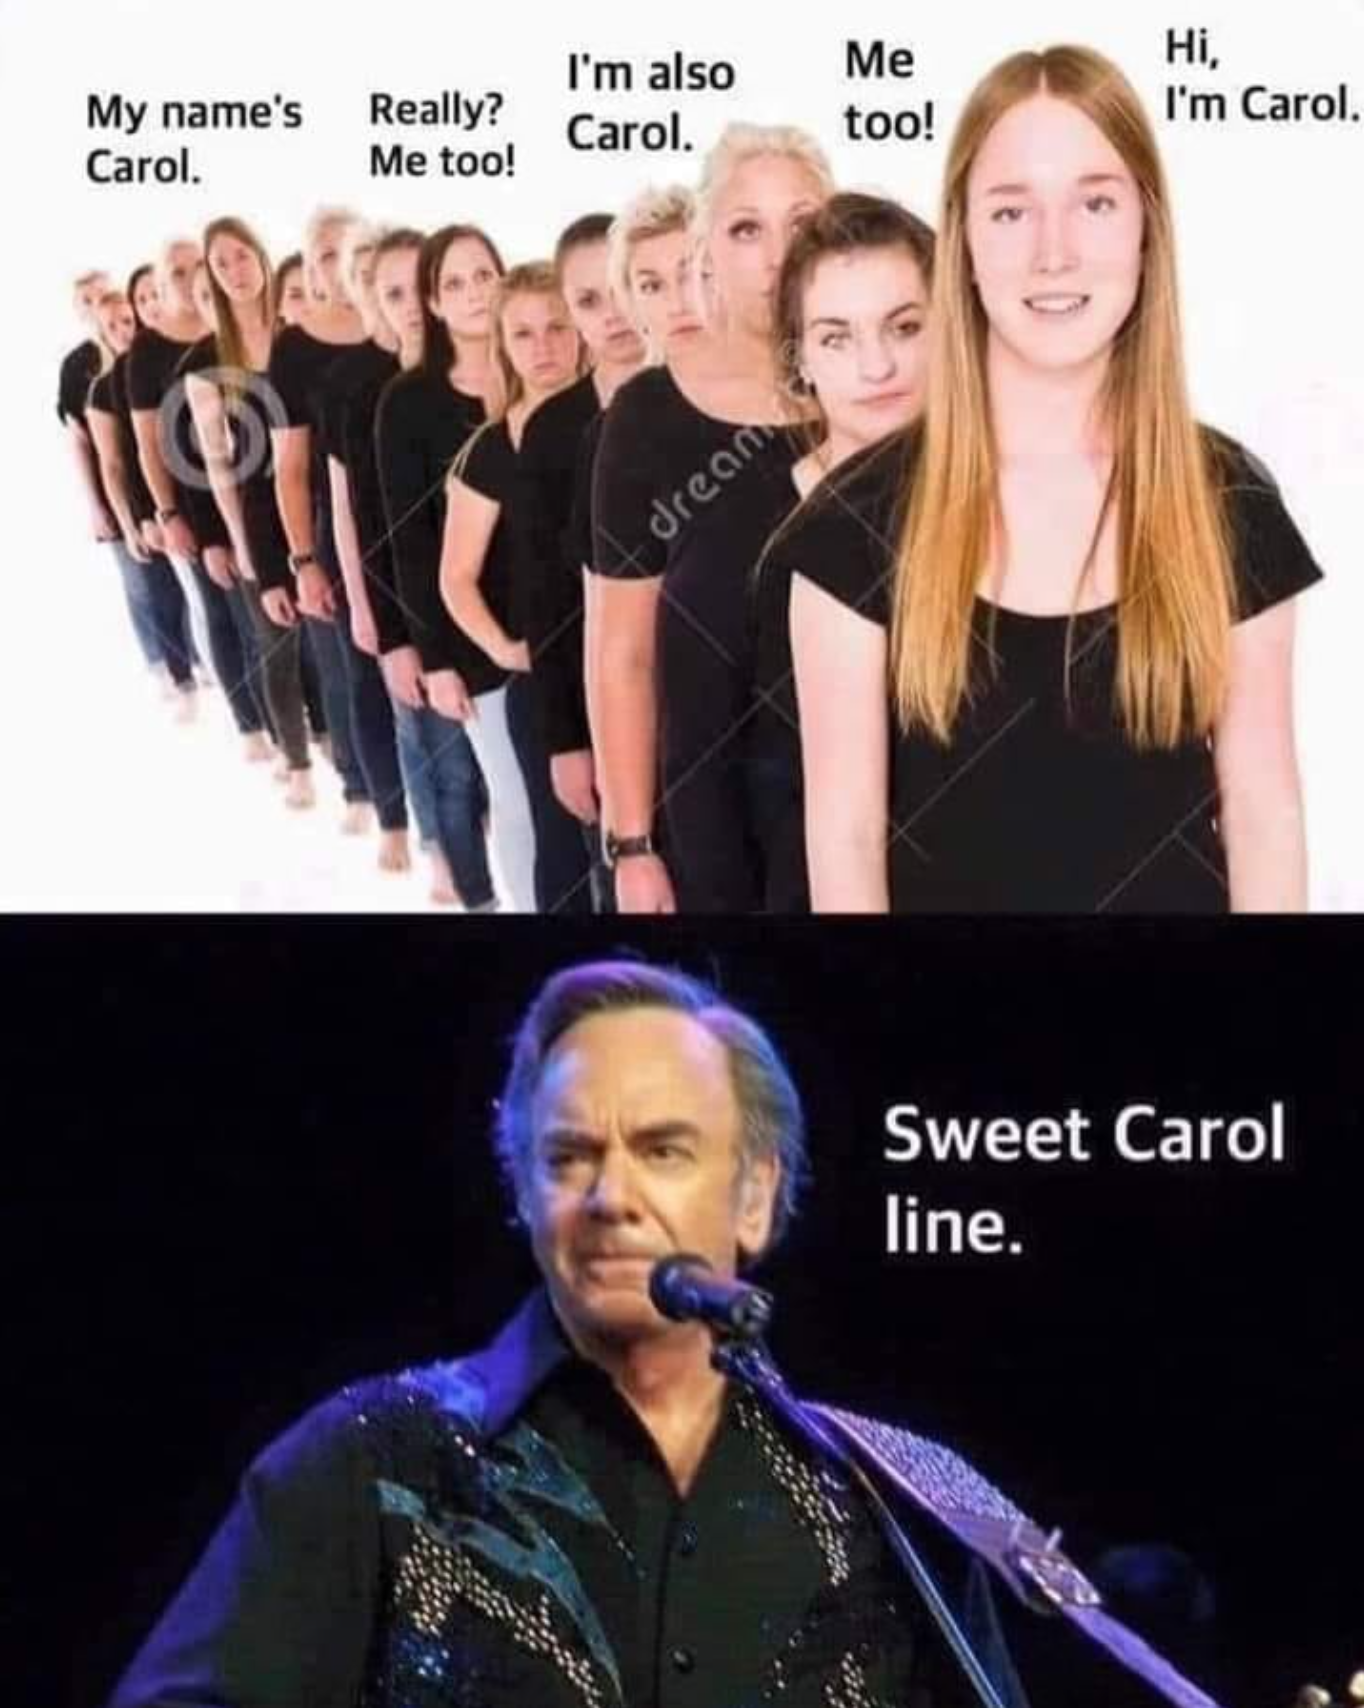 sweet carol line meme - Me I'm also Carol. Hi I'm Carol My name's Really? Carol. Me too! too! drean Sweet Carol line.